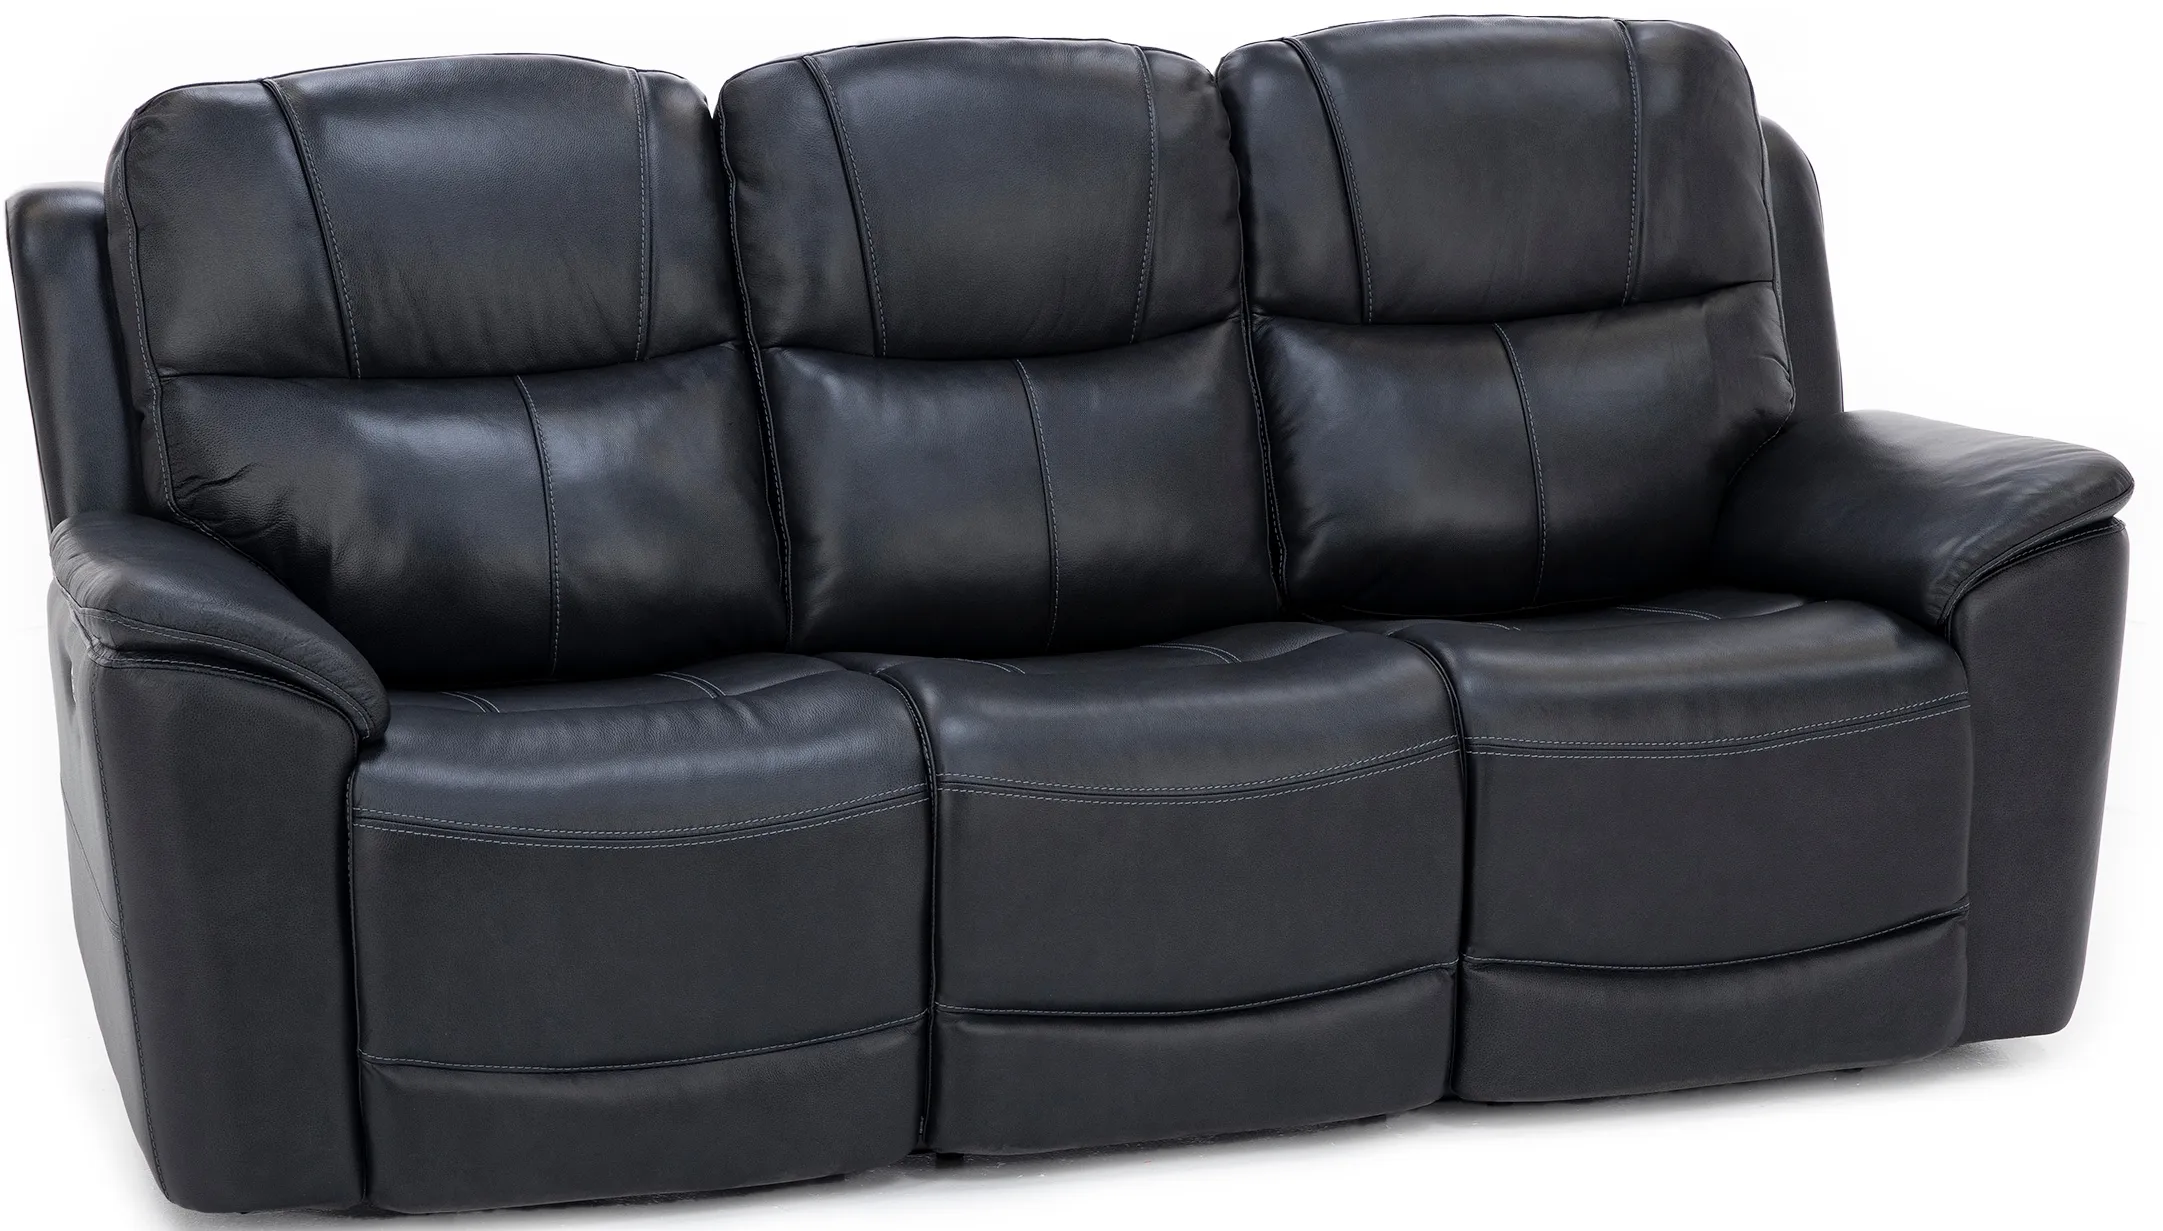 Wrenn Leather Fully Loaded Zero Gravity Reclining Sofa in Raven